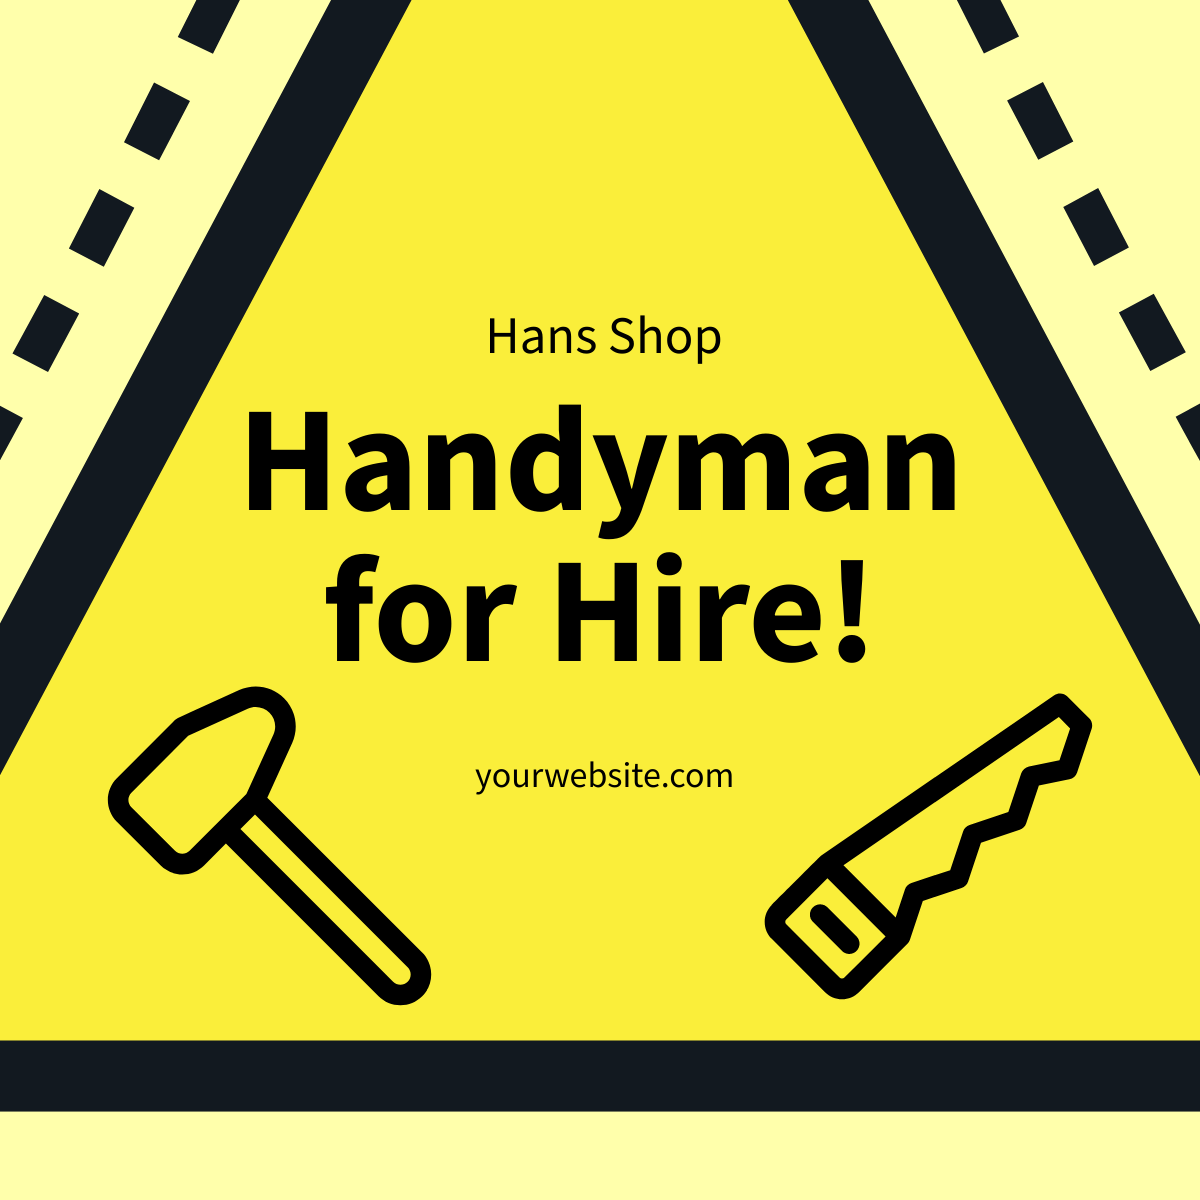 Hiring Handyman Linkedin Post